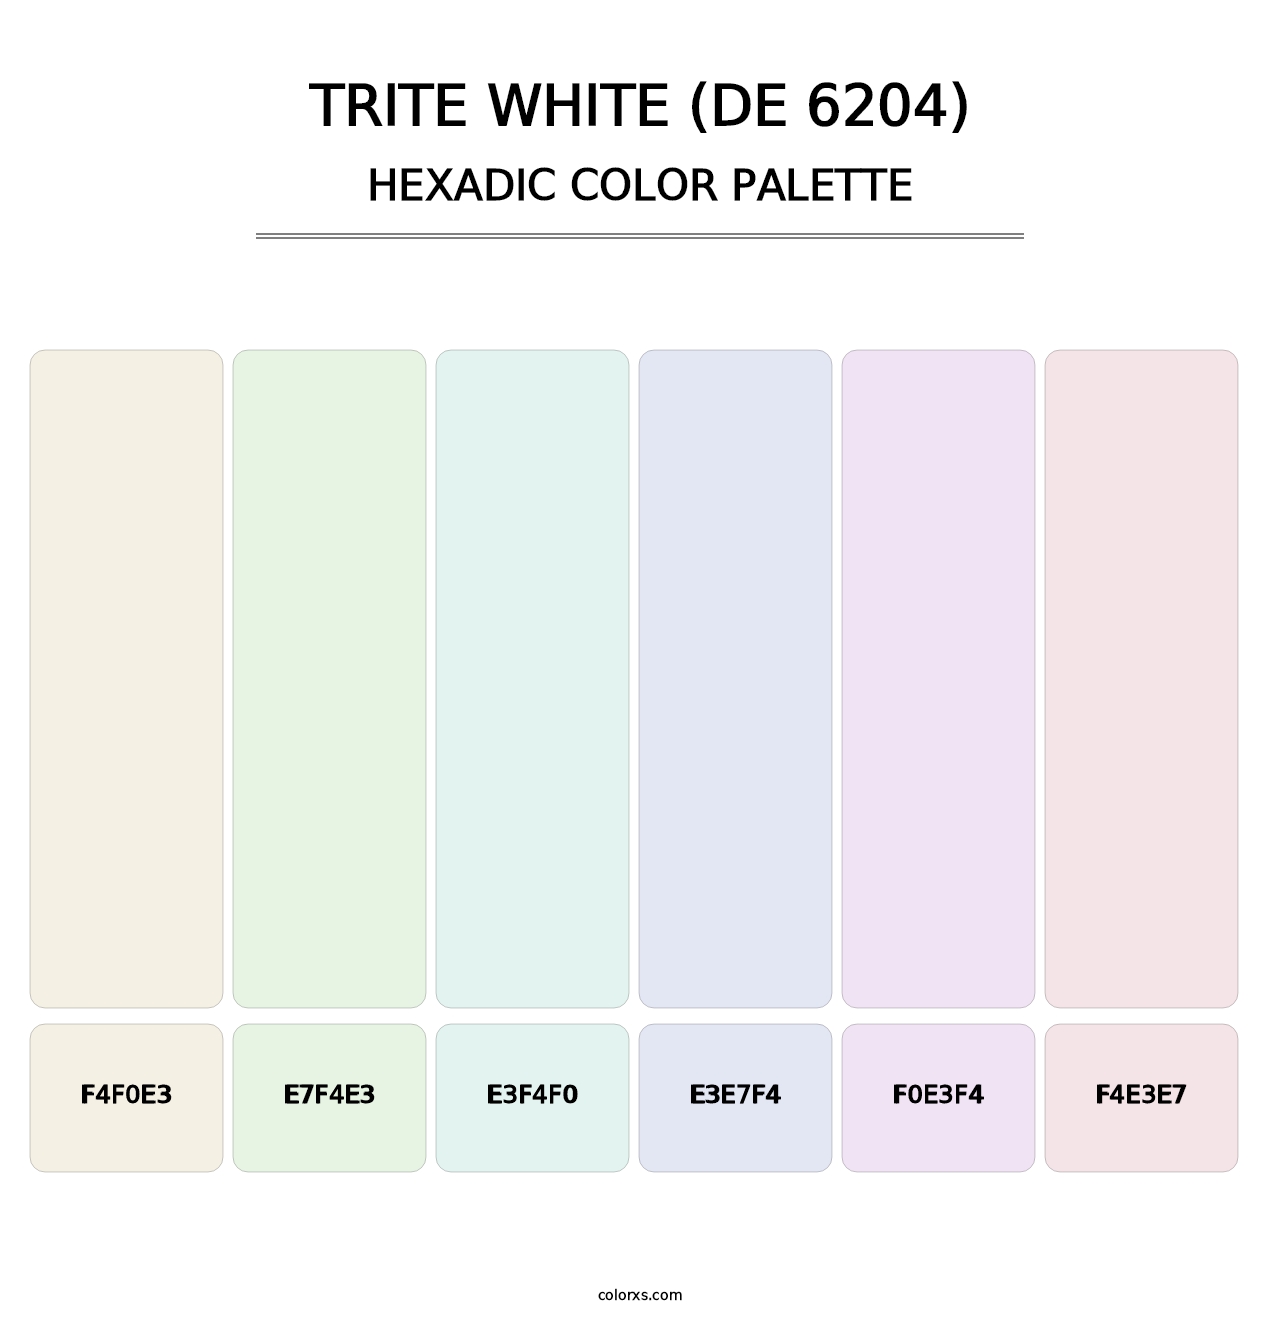 Trite White (DE 6204) - Hexadic Color Palette